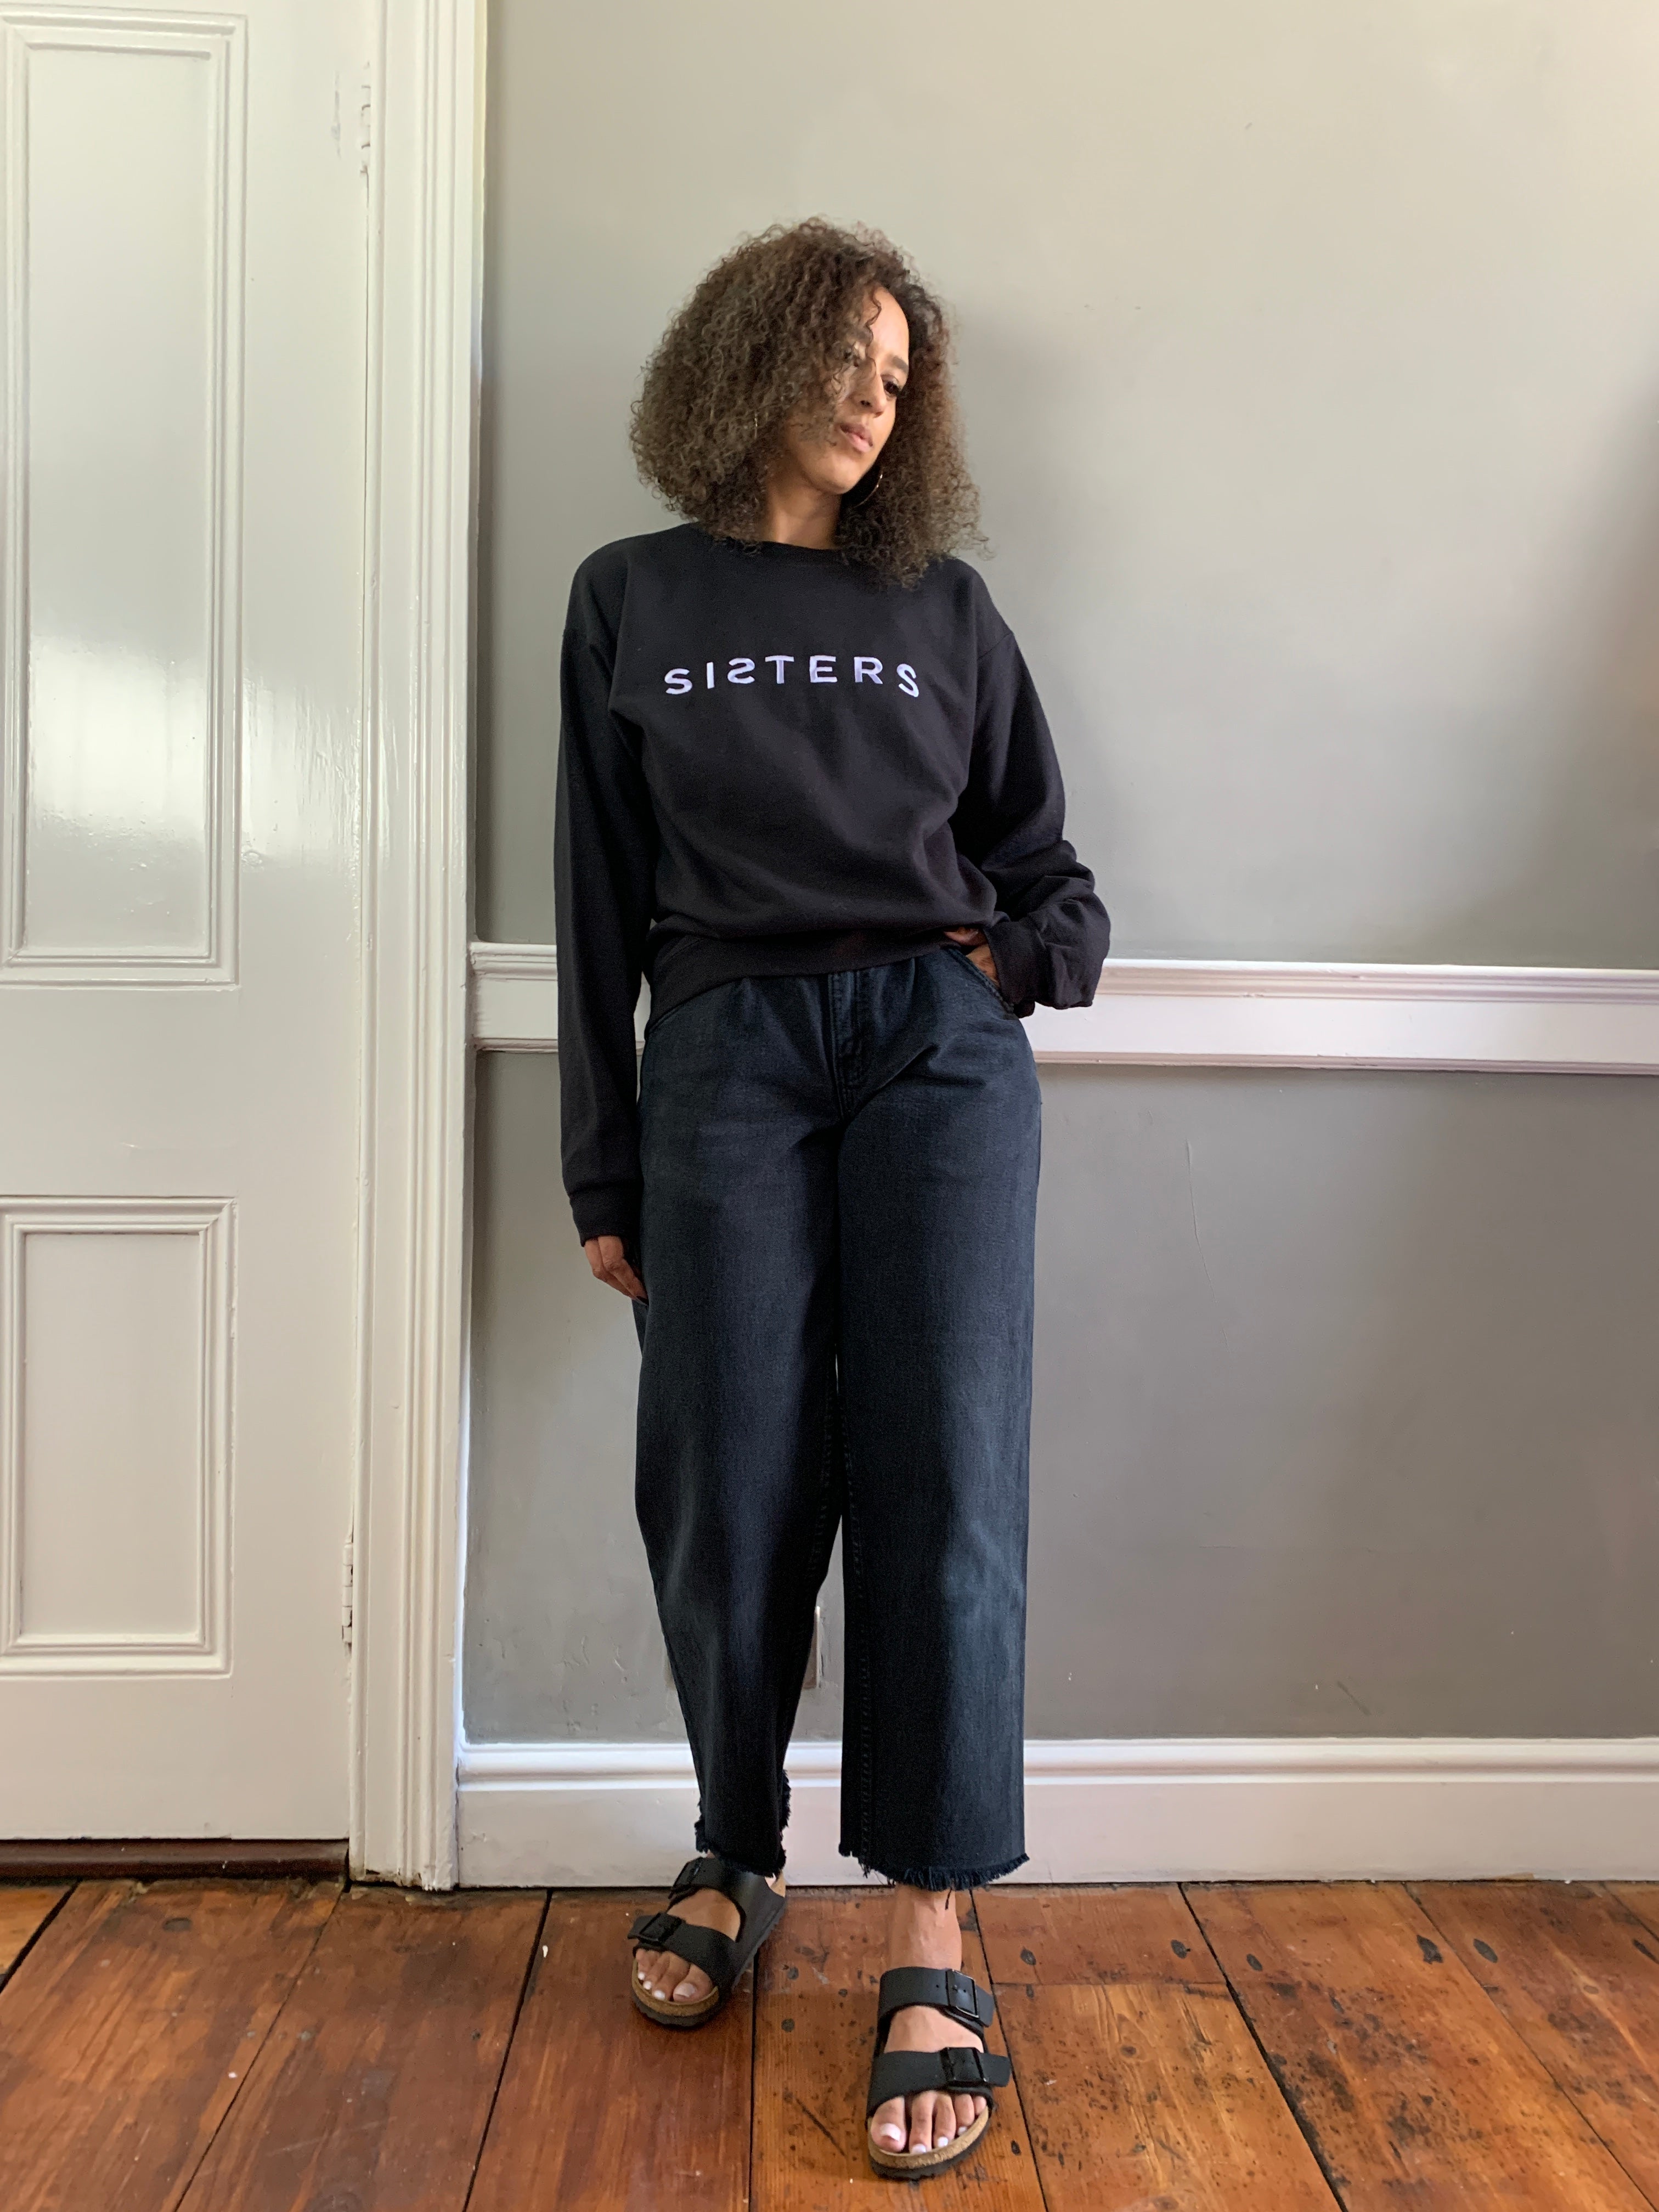 SISTERS embroidered sweatshirts Small/Medium